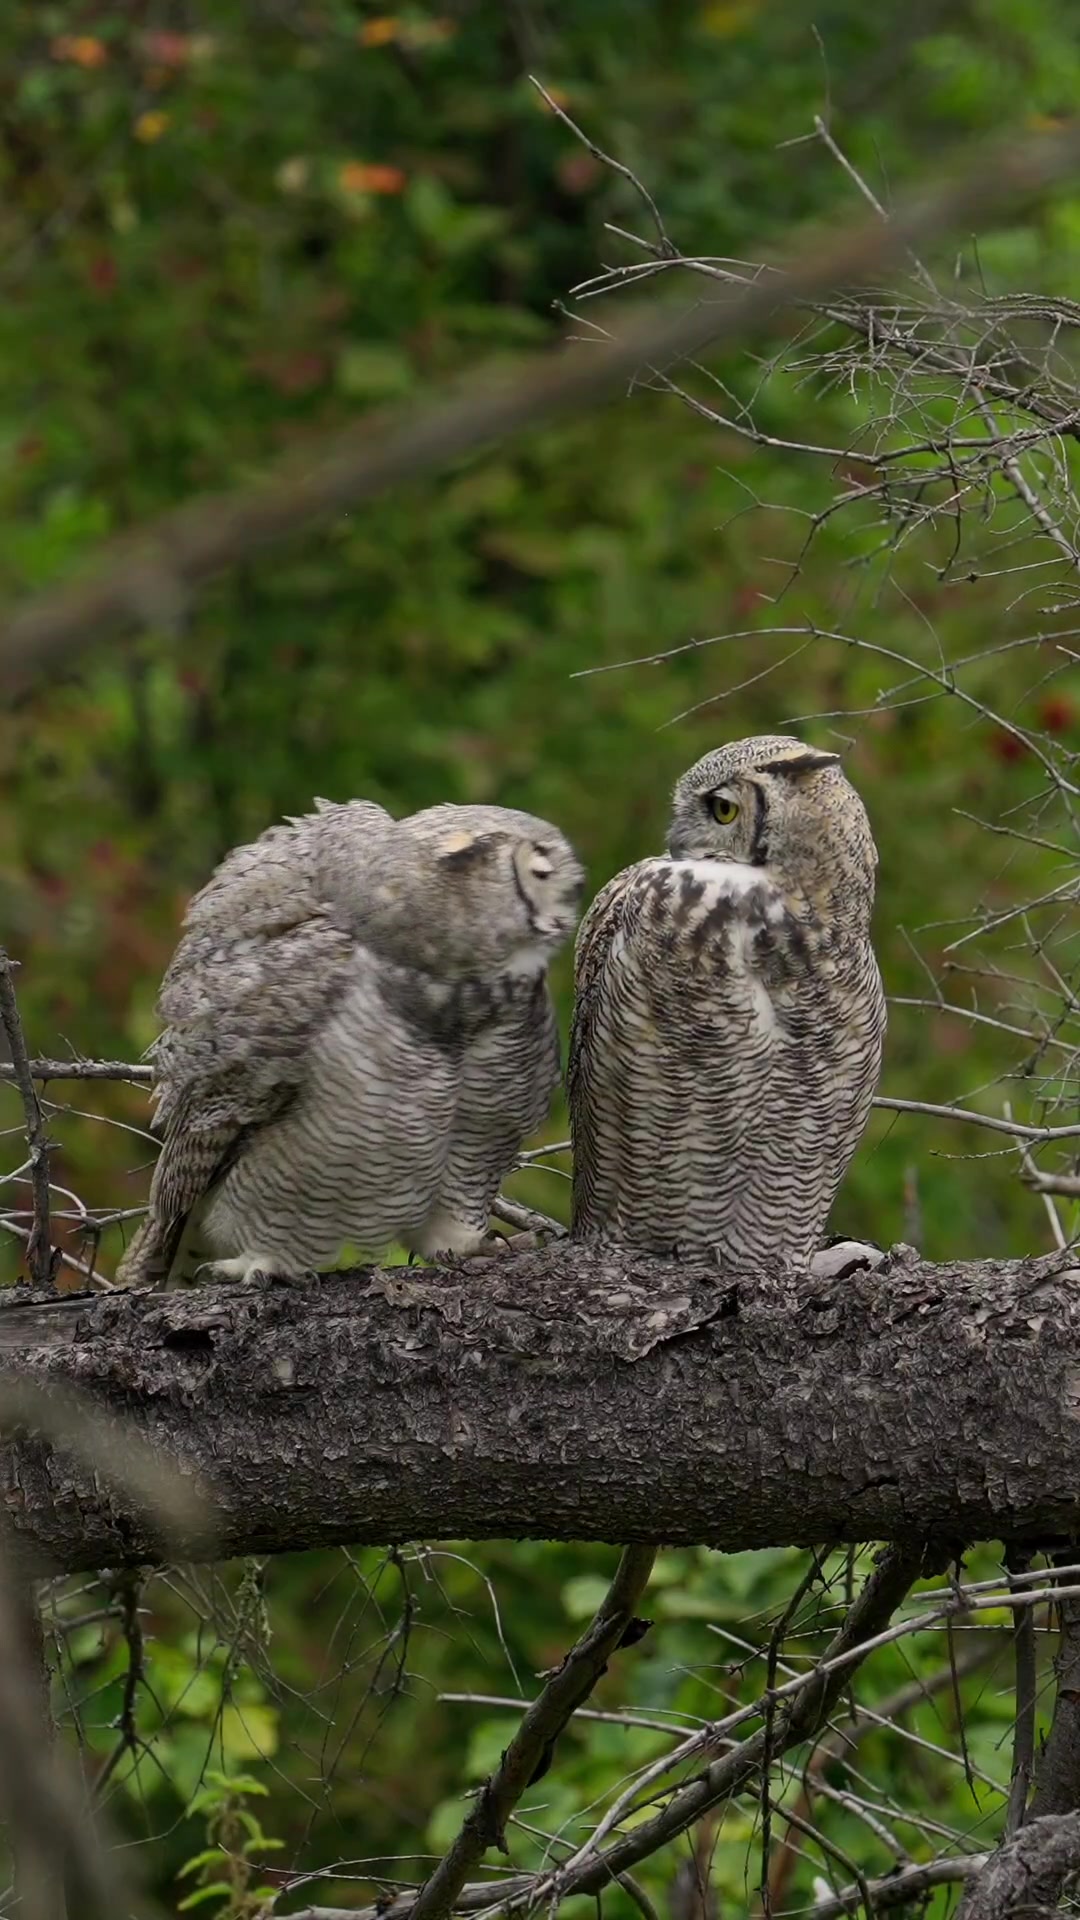 @coltonlockridge [251/365] - Juvenile Great Horned Owls playfighting and preenin...